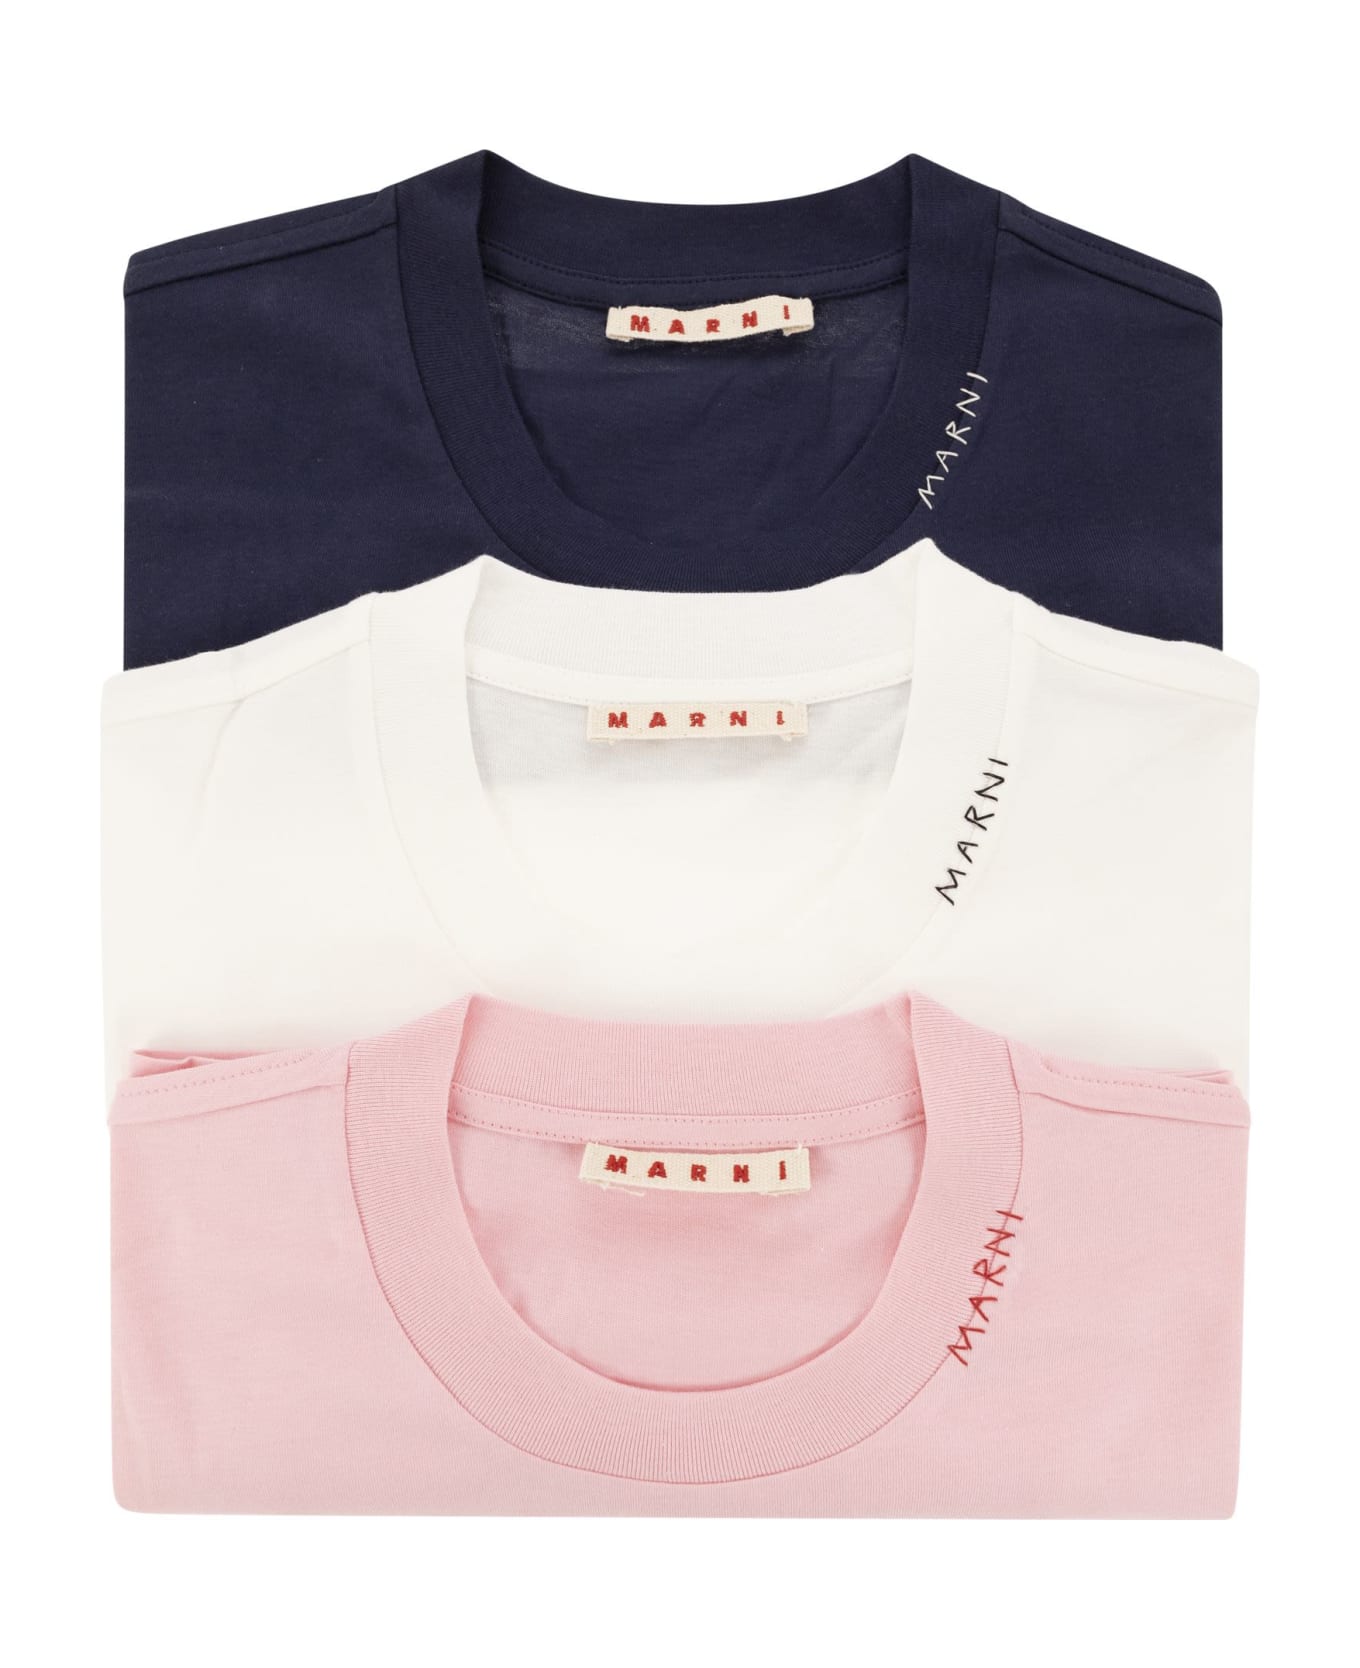 Marni 3 Pack Logo T-shirt - Pink/white/blue